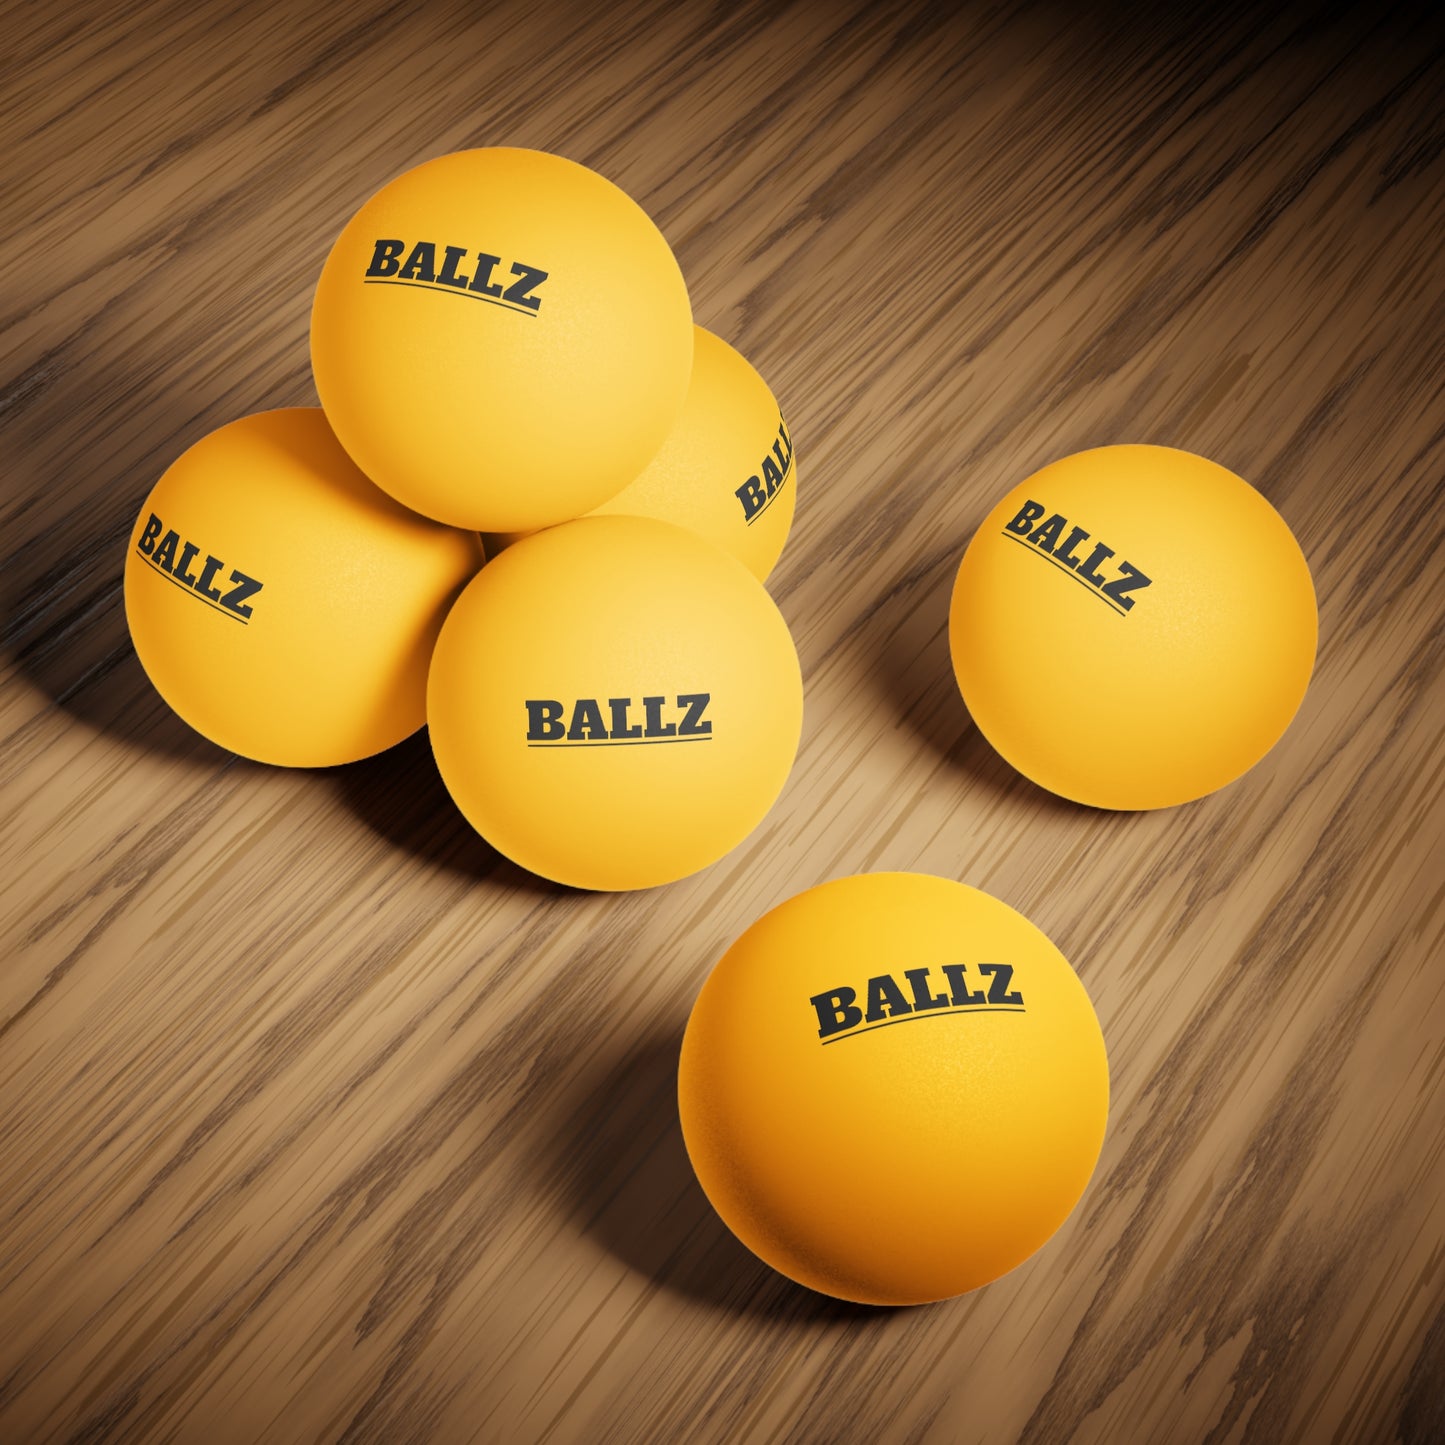 BALLZ Ping Pong Balls